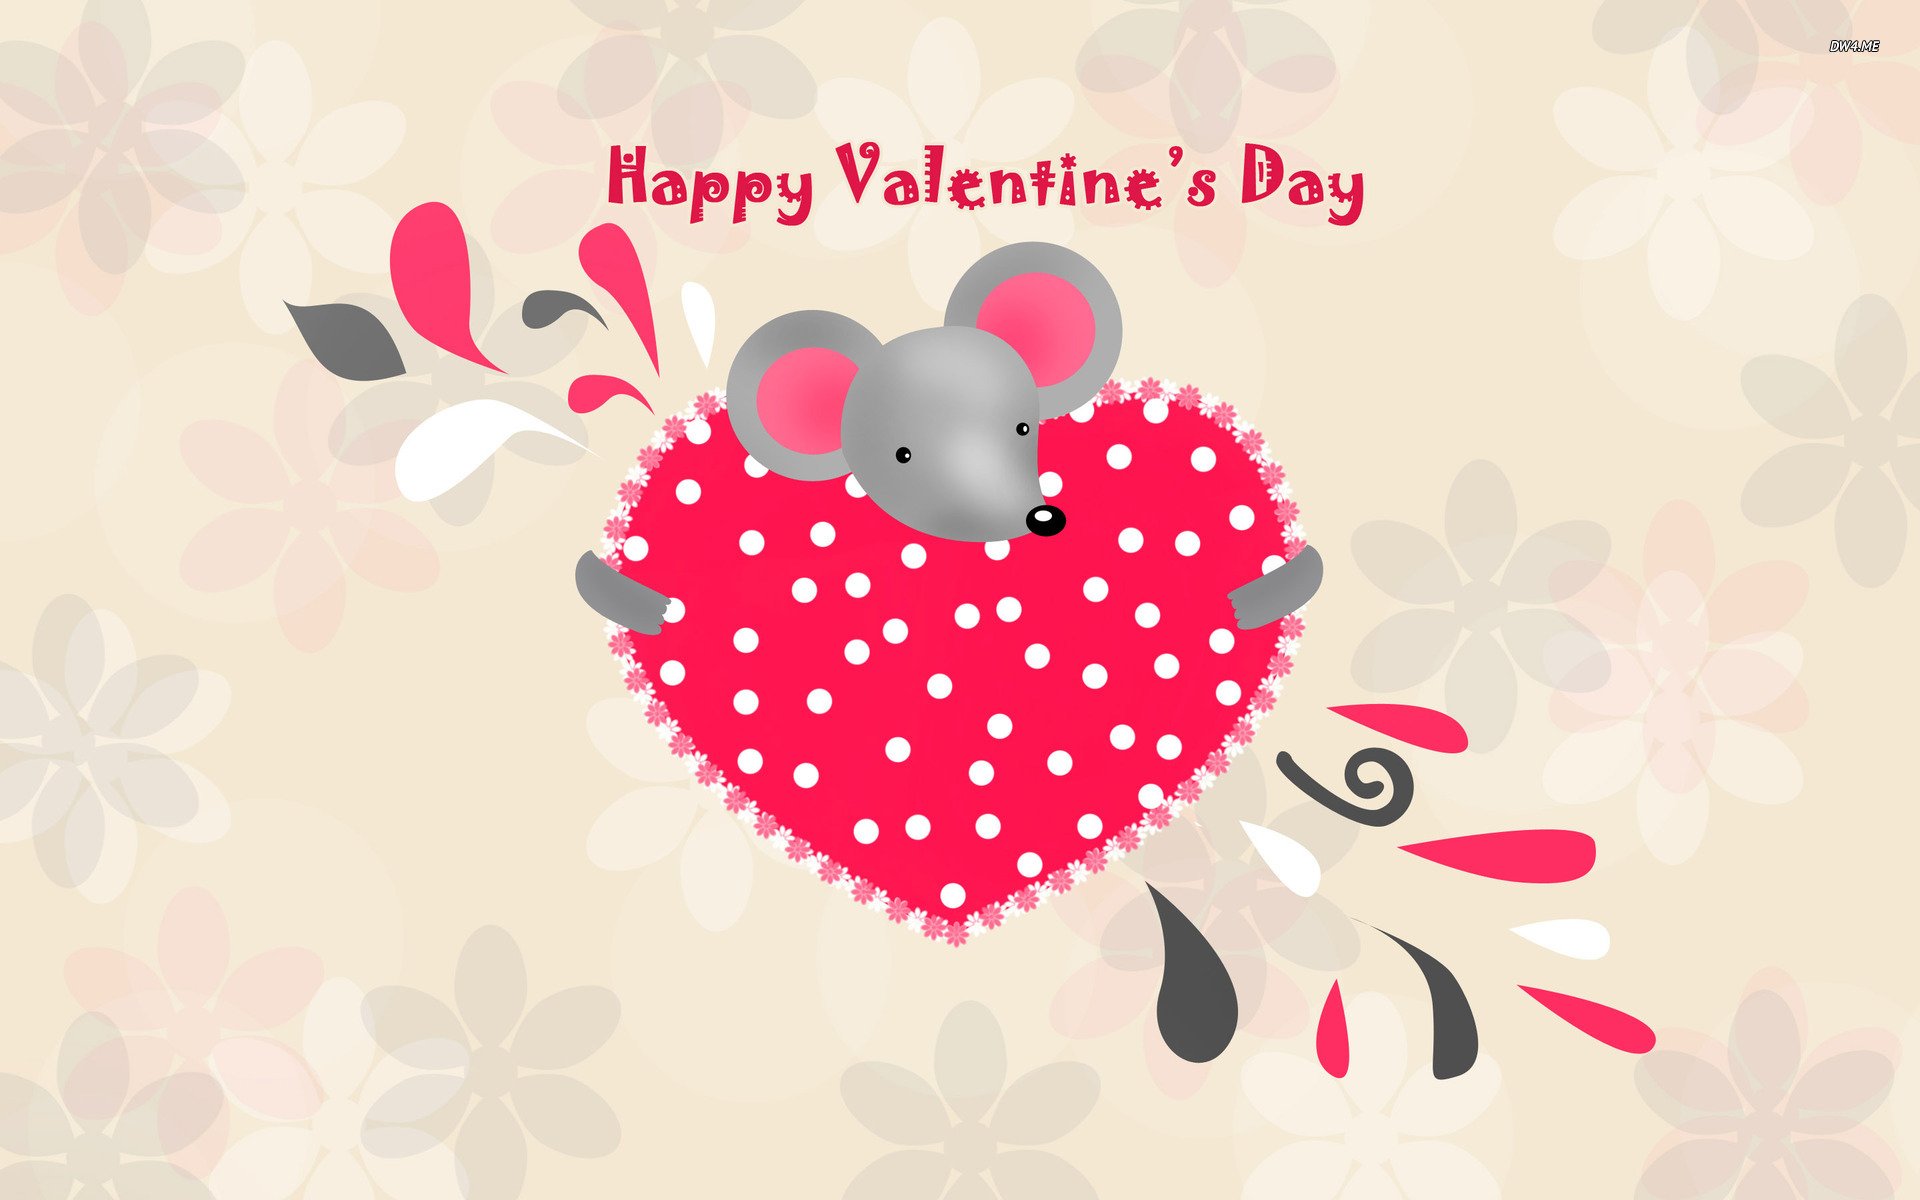 Happy Valentines Day wallpaper   798408